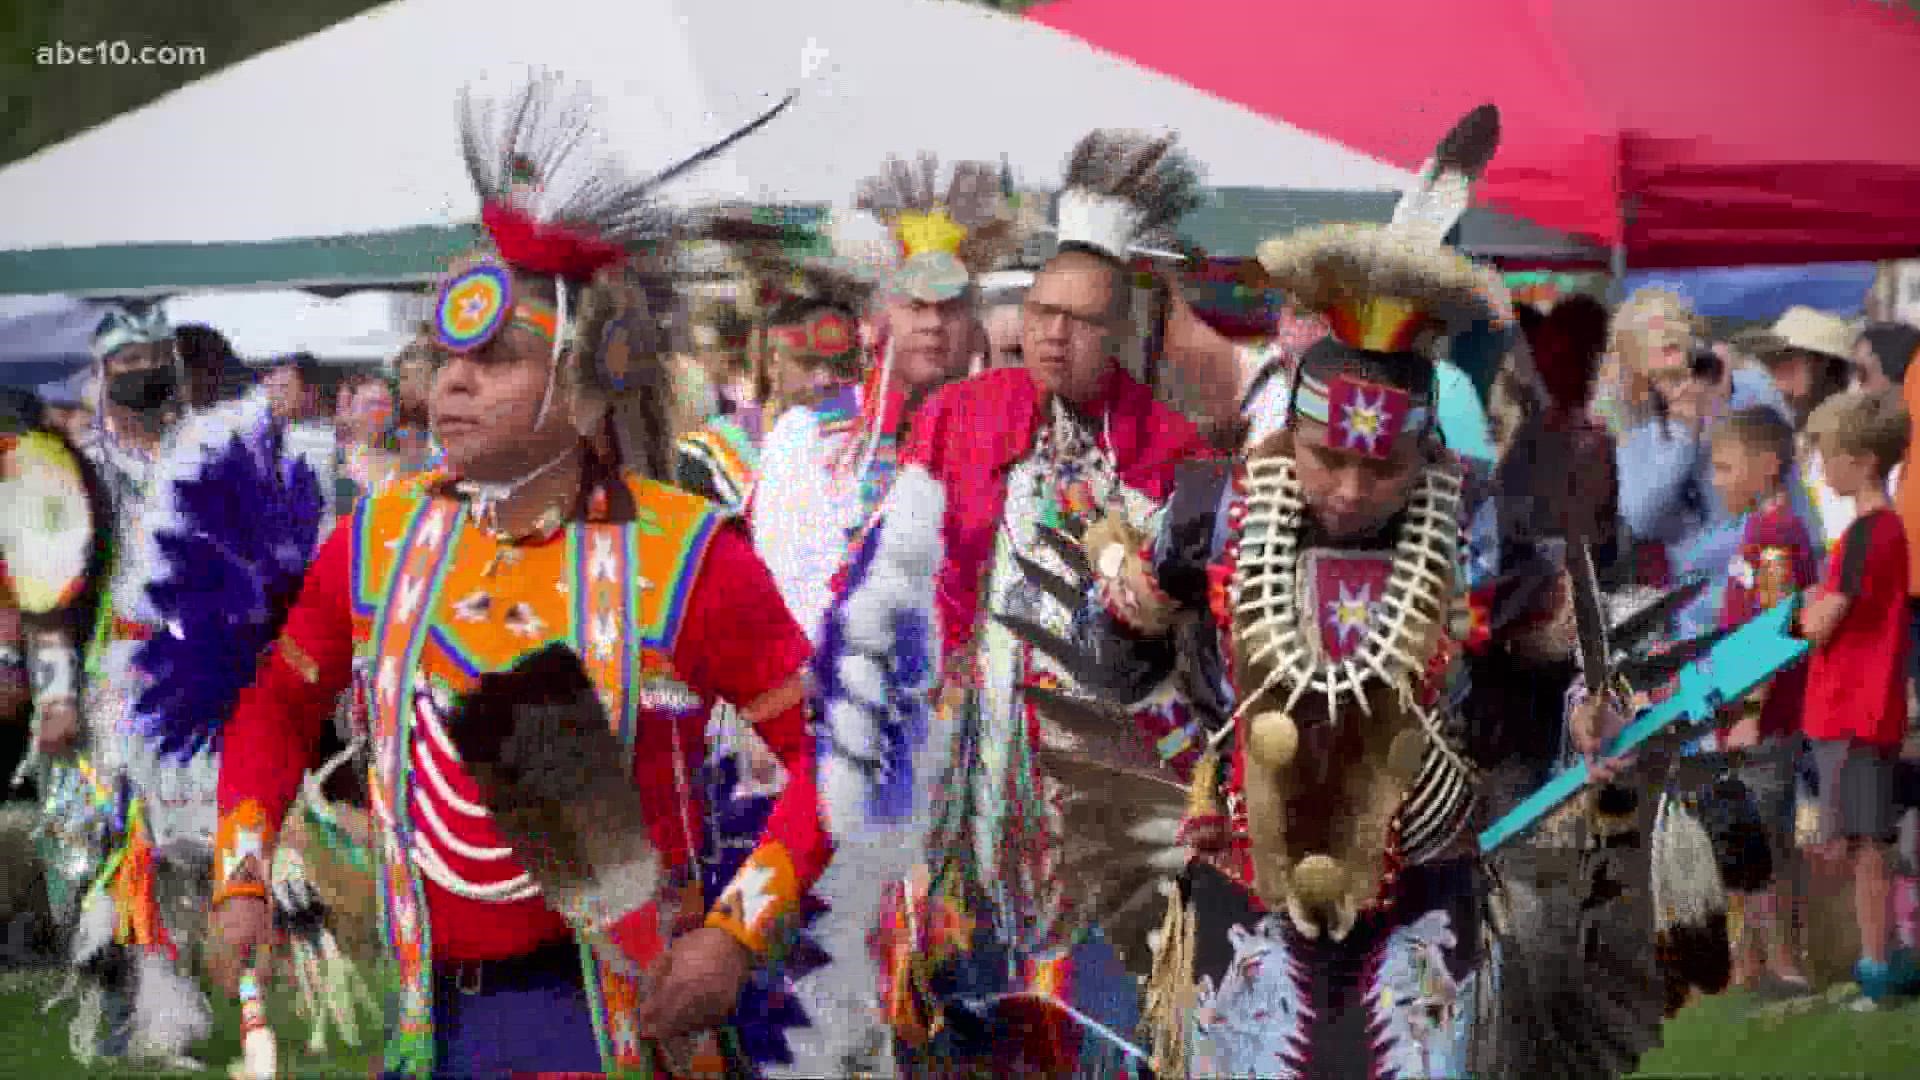 Auburn Big Time Pow Wow celebrates Native American culture